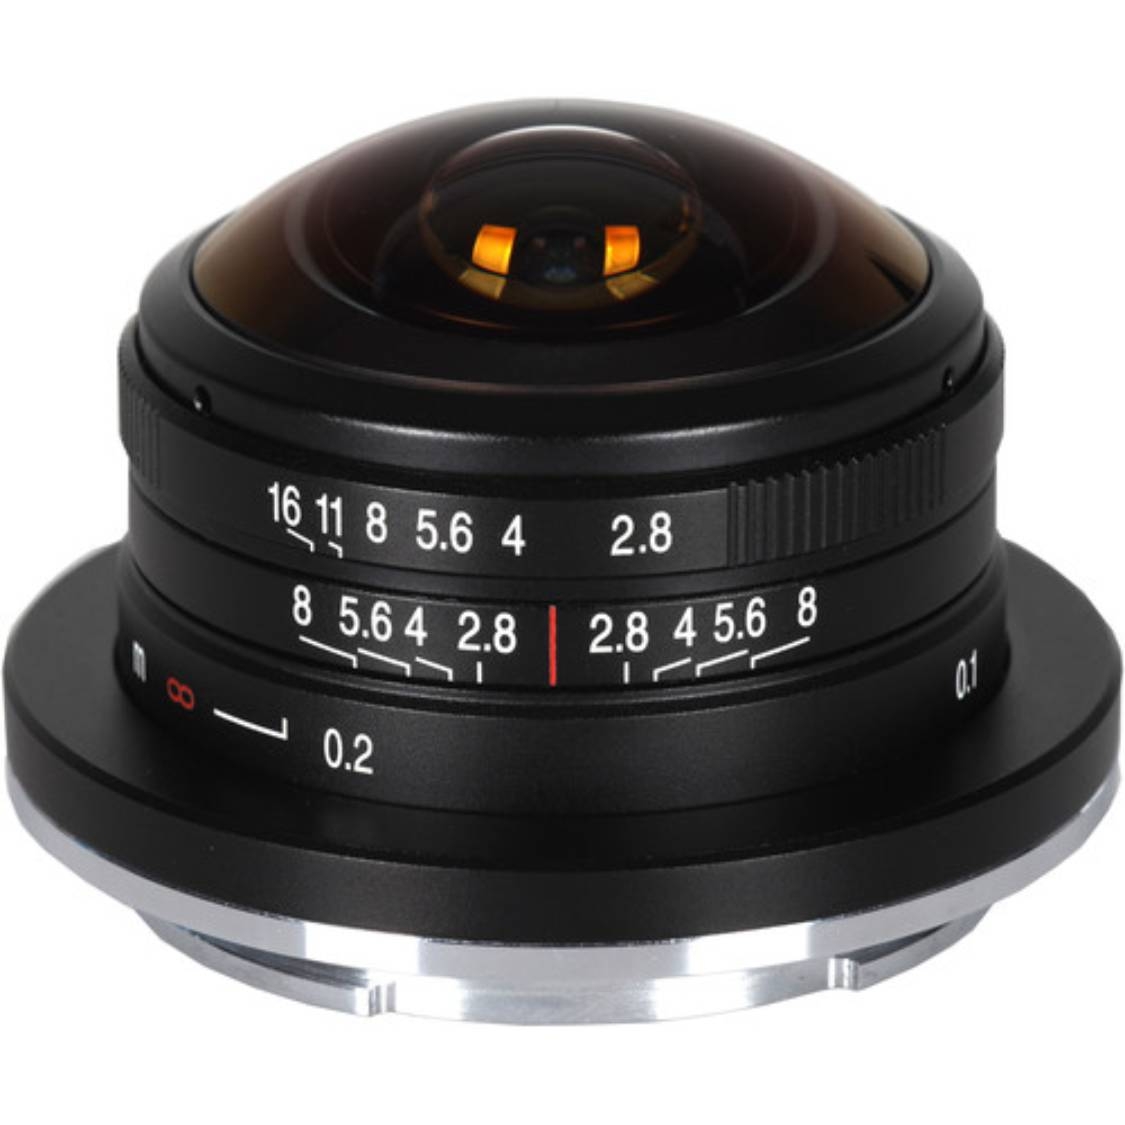 Laowa 4mm f/2.8 Fisheye Lens for Micro 4/3